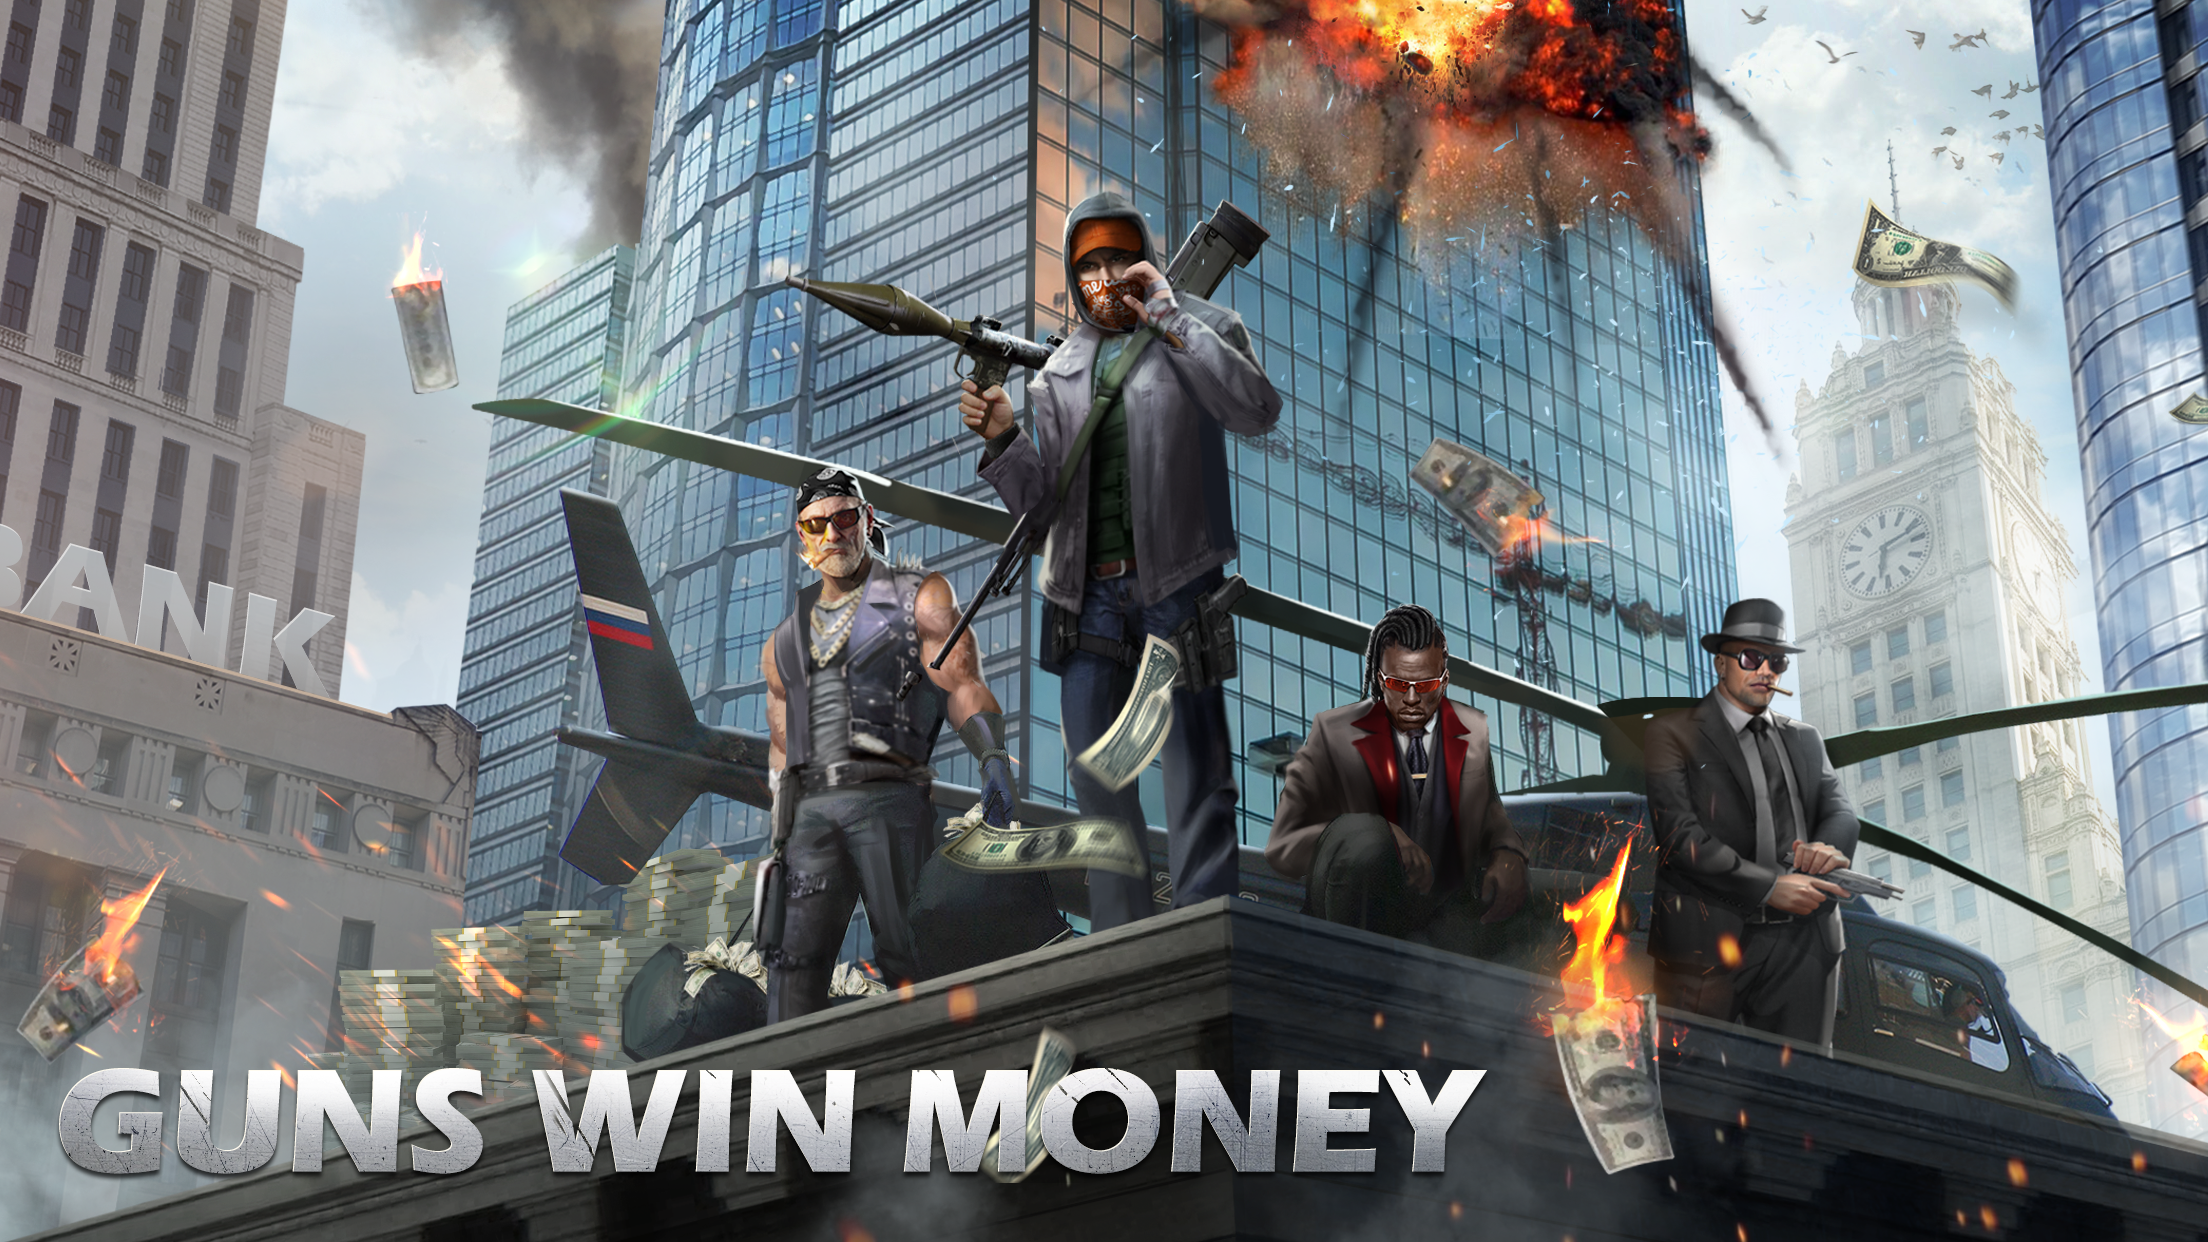 Screenshot of War Elite: City Survival